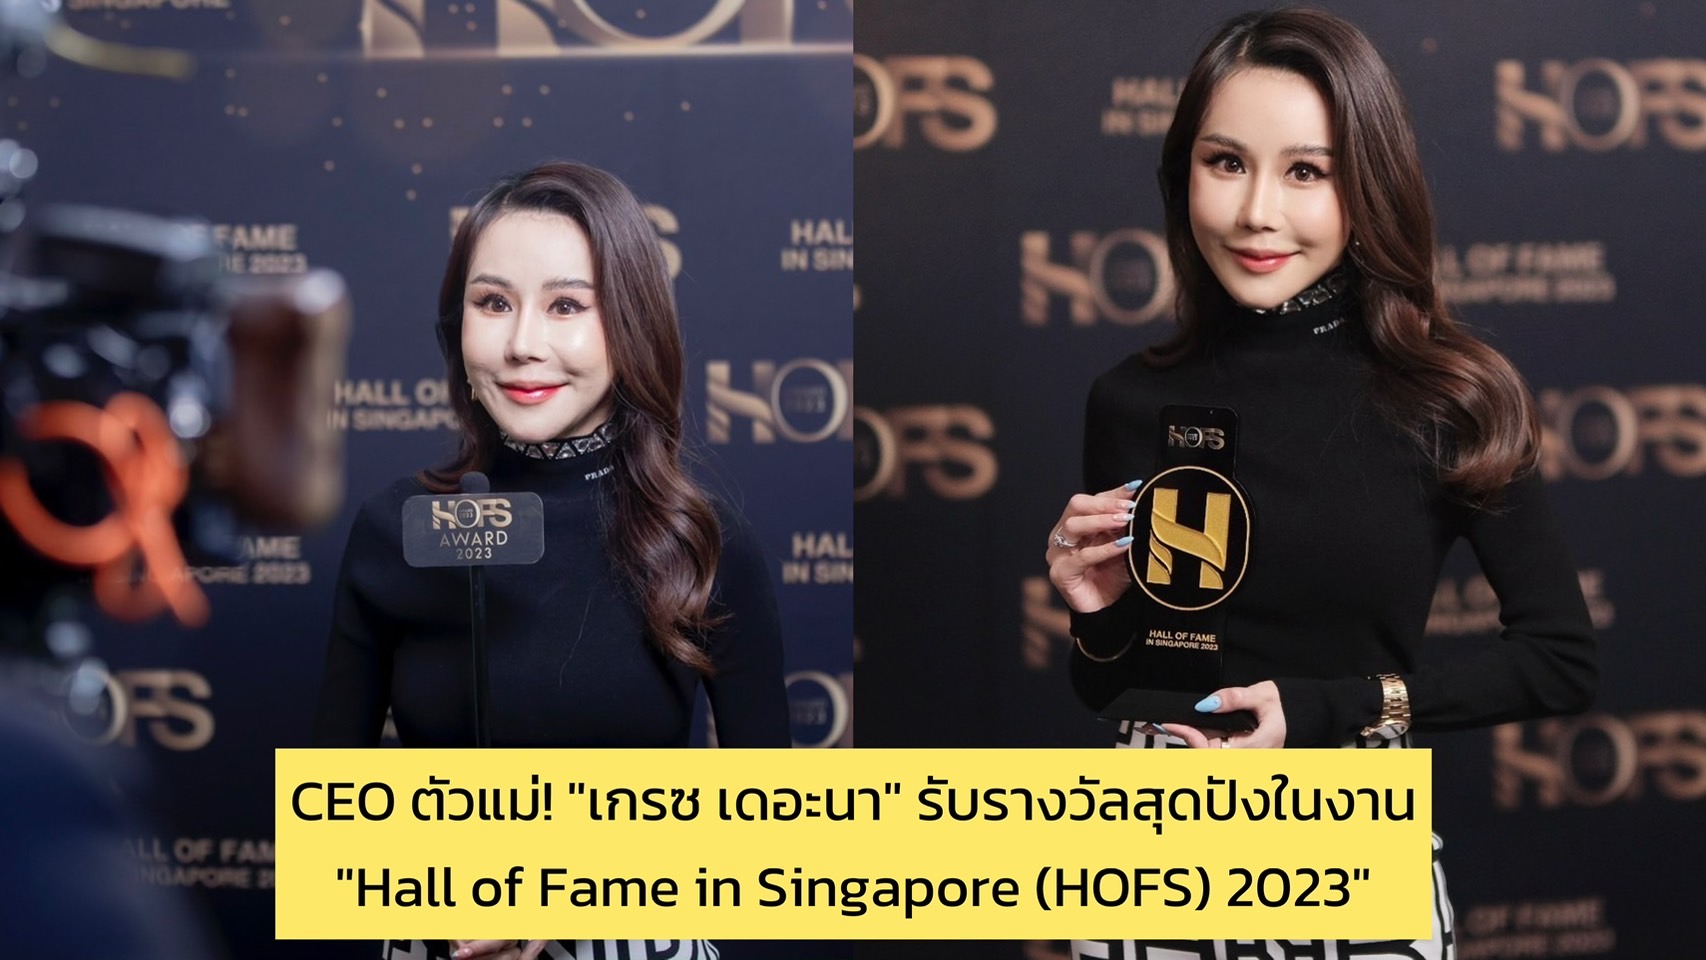 CEO ตัวแม่! The Na Thailand “เกรซ เดอะนา” บินรับรางวัลสุดปัง ที่สิงคโปร์ในงาน “Hall of Fame in Singapore (HOFS) 2023”